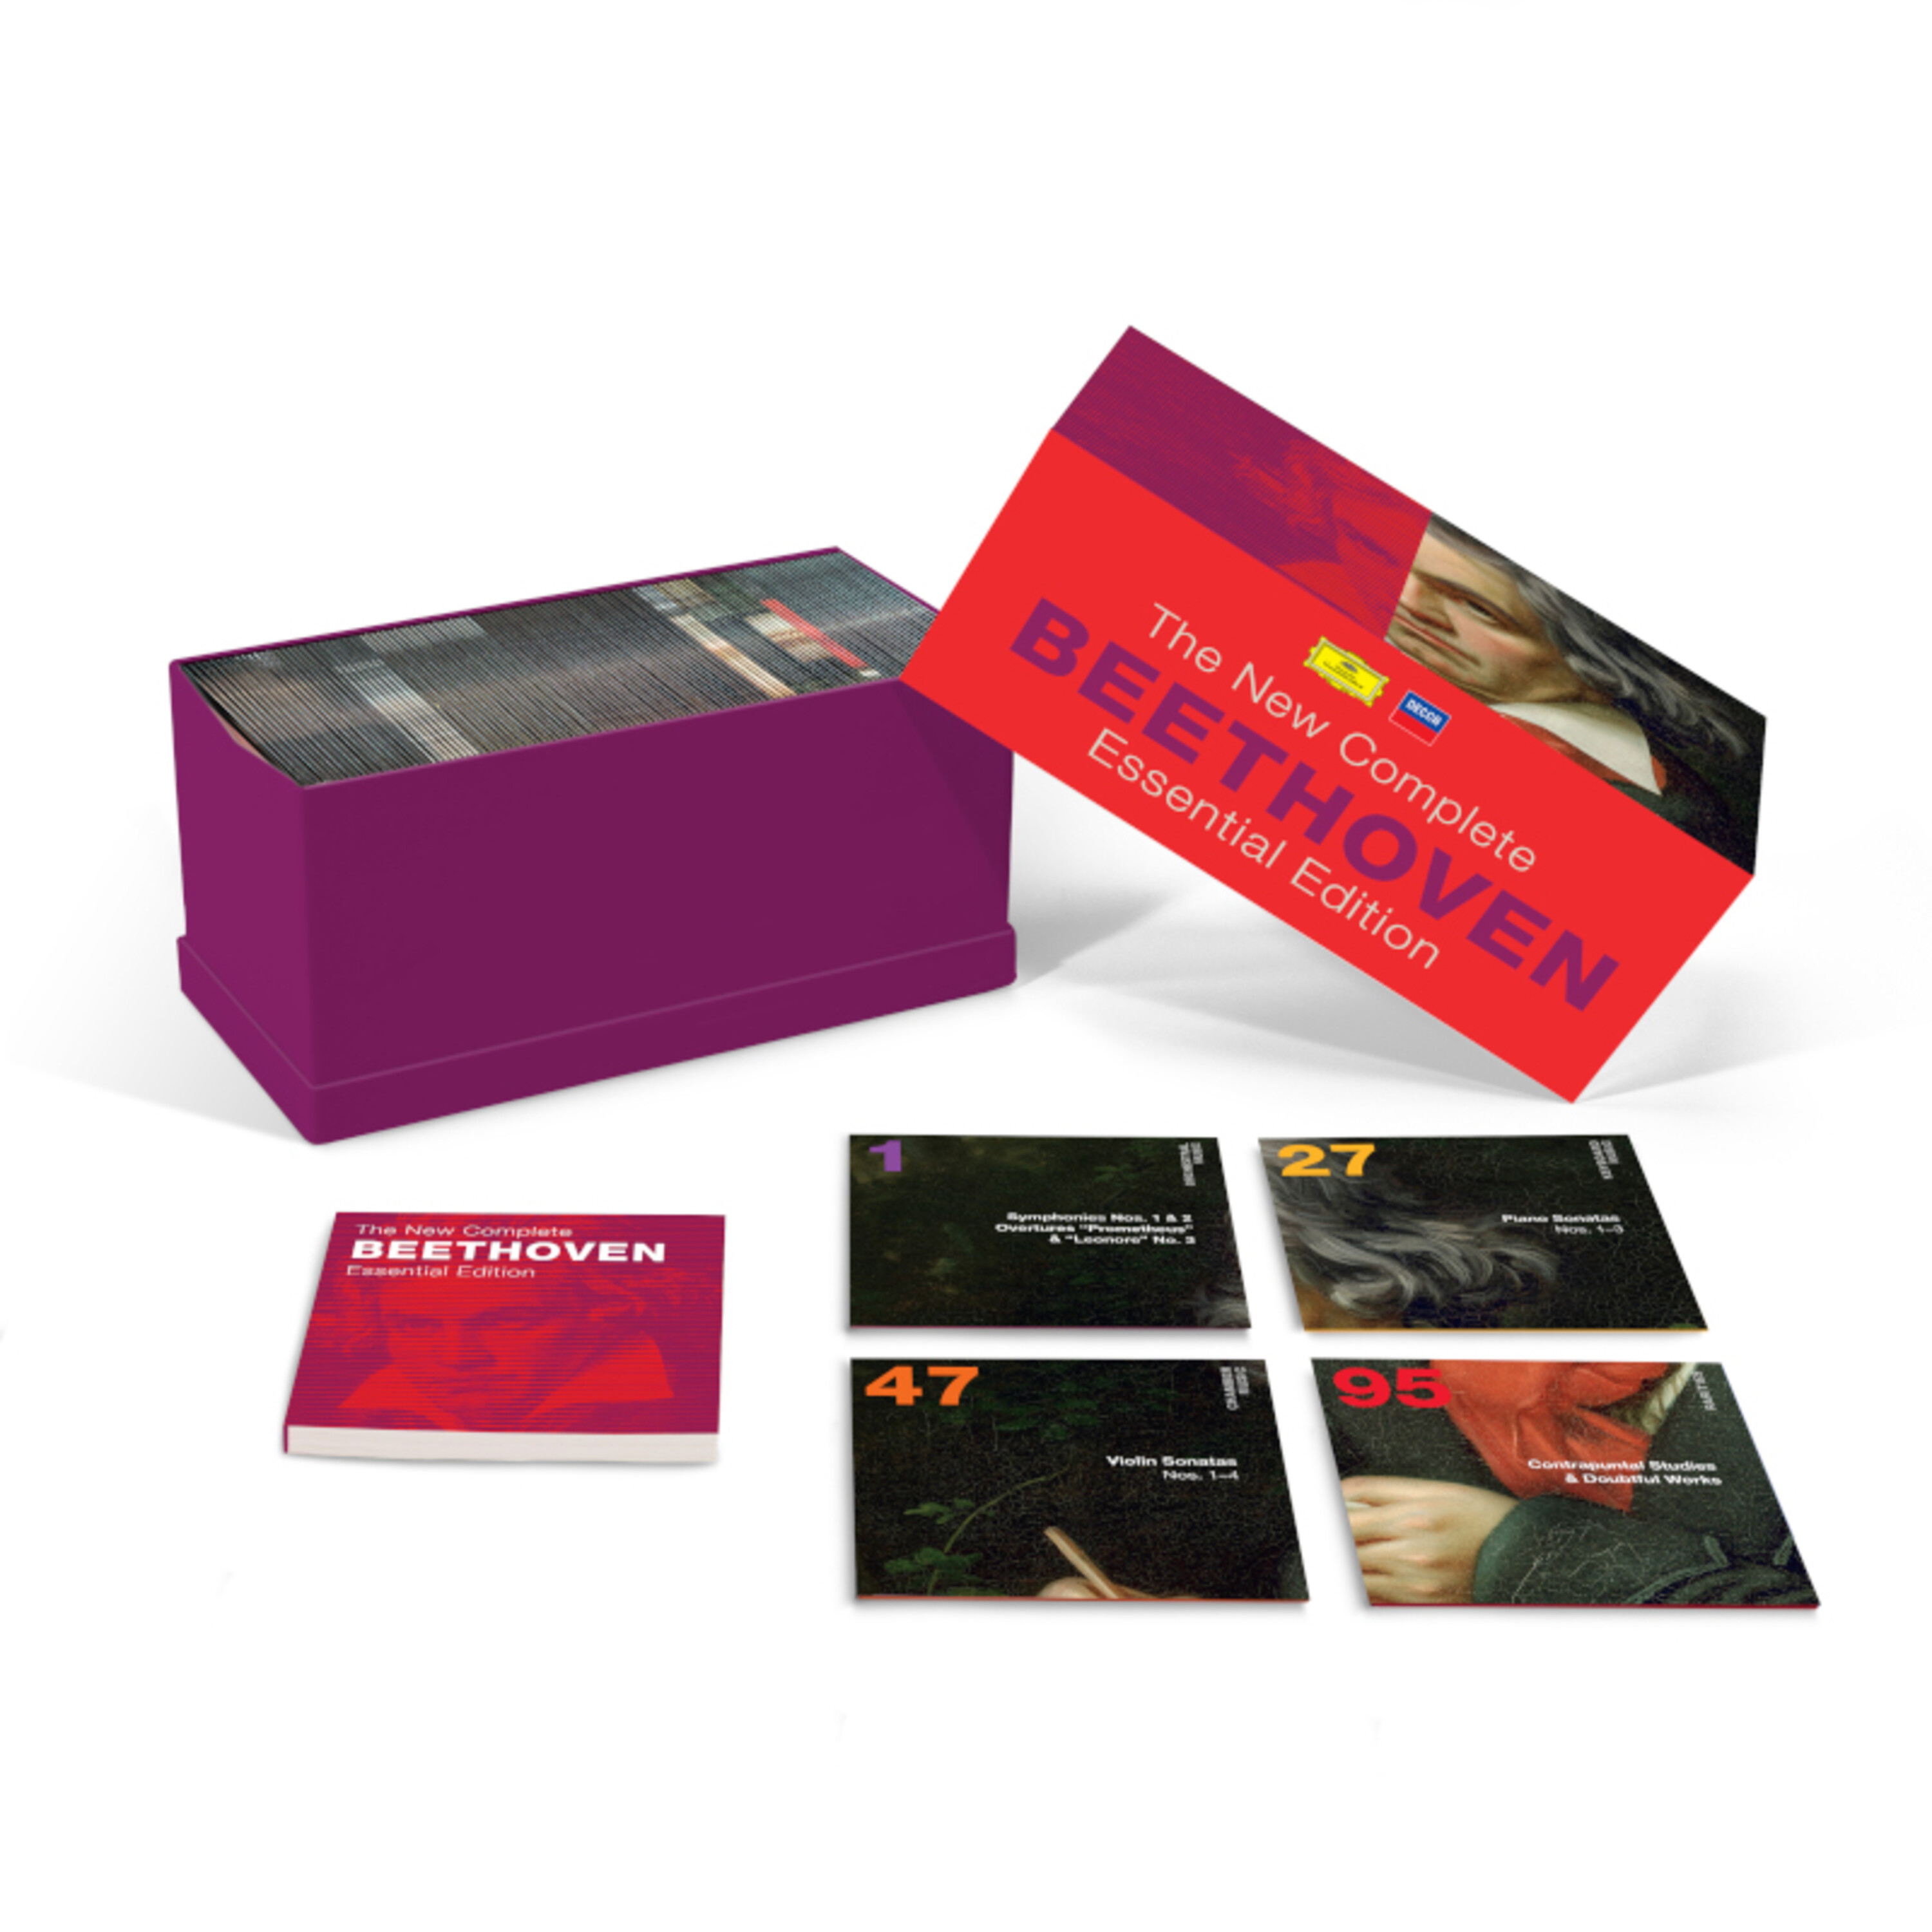 Essential　(Ltd　offizielle　Beethoven　The　Complete　Ludwig　van　Edition　Der　Boxset)　Deutsche　New　Beethoven　Grammophon　Shop　Bundle